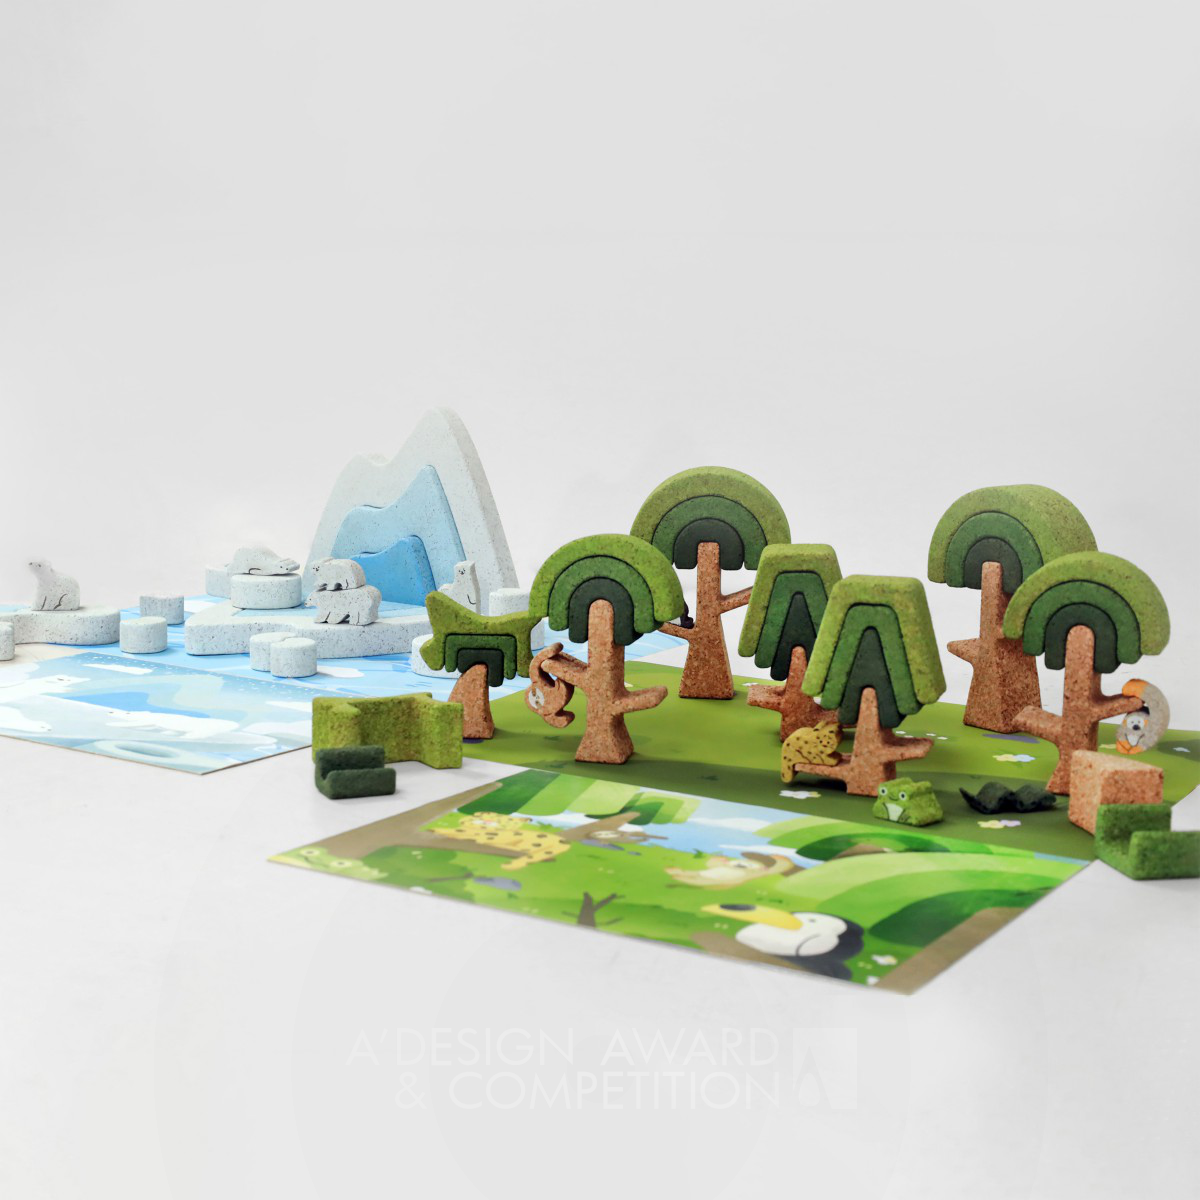 Habitat Educational Toy Brick by ChungSheng Chen